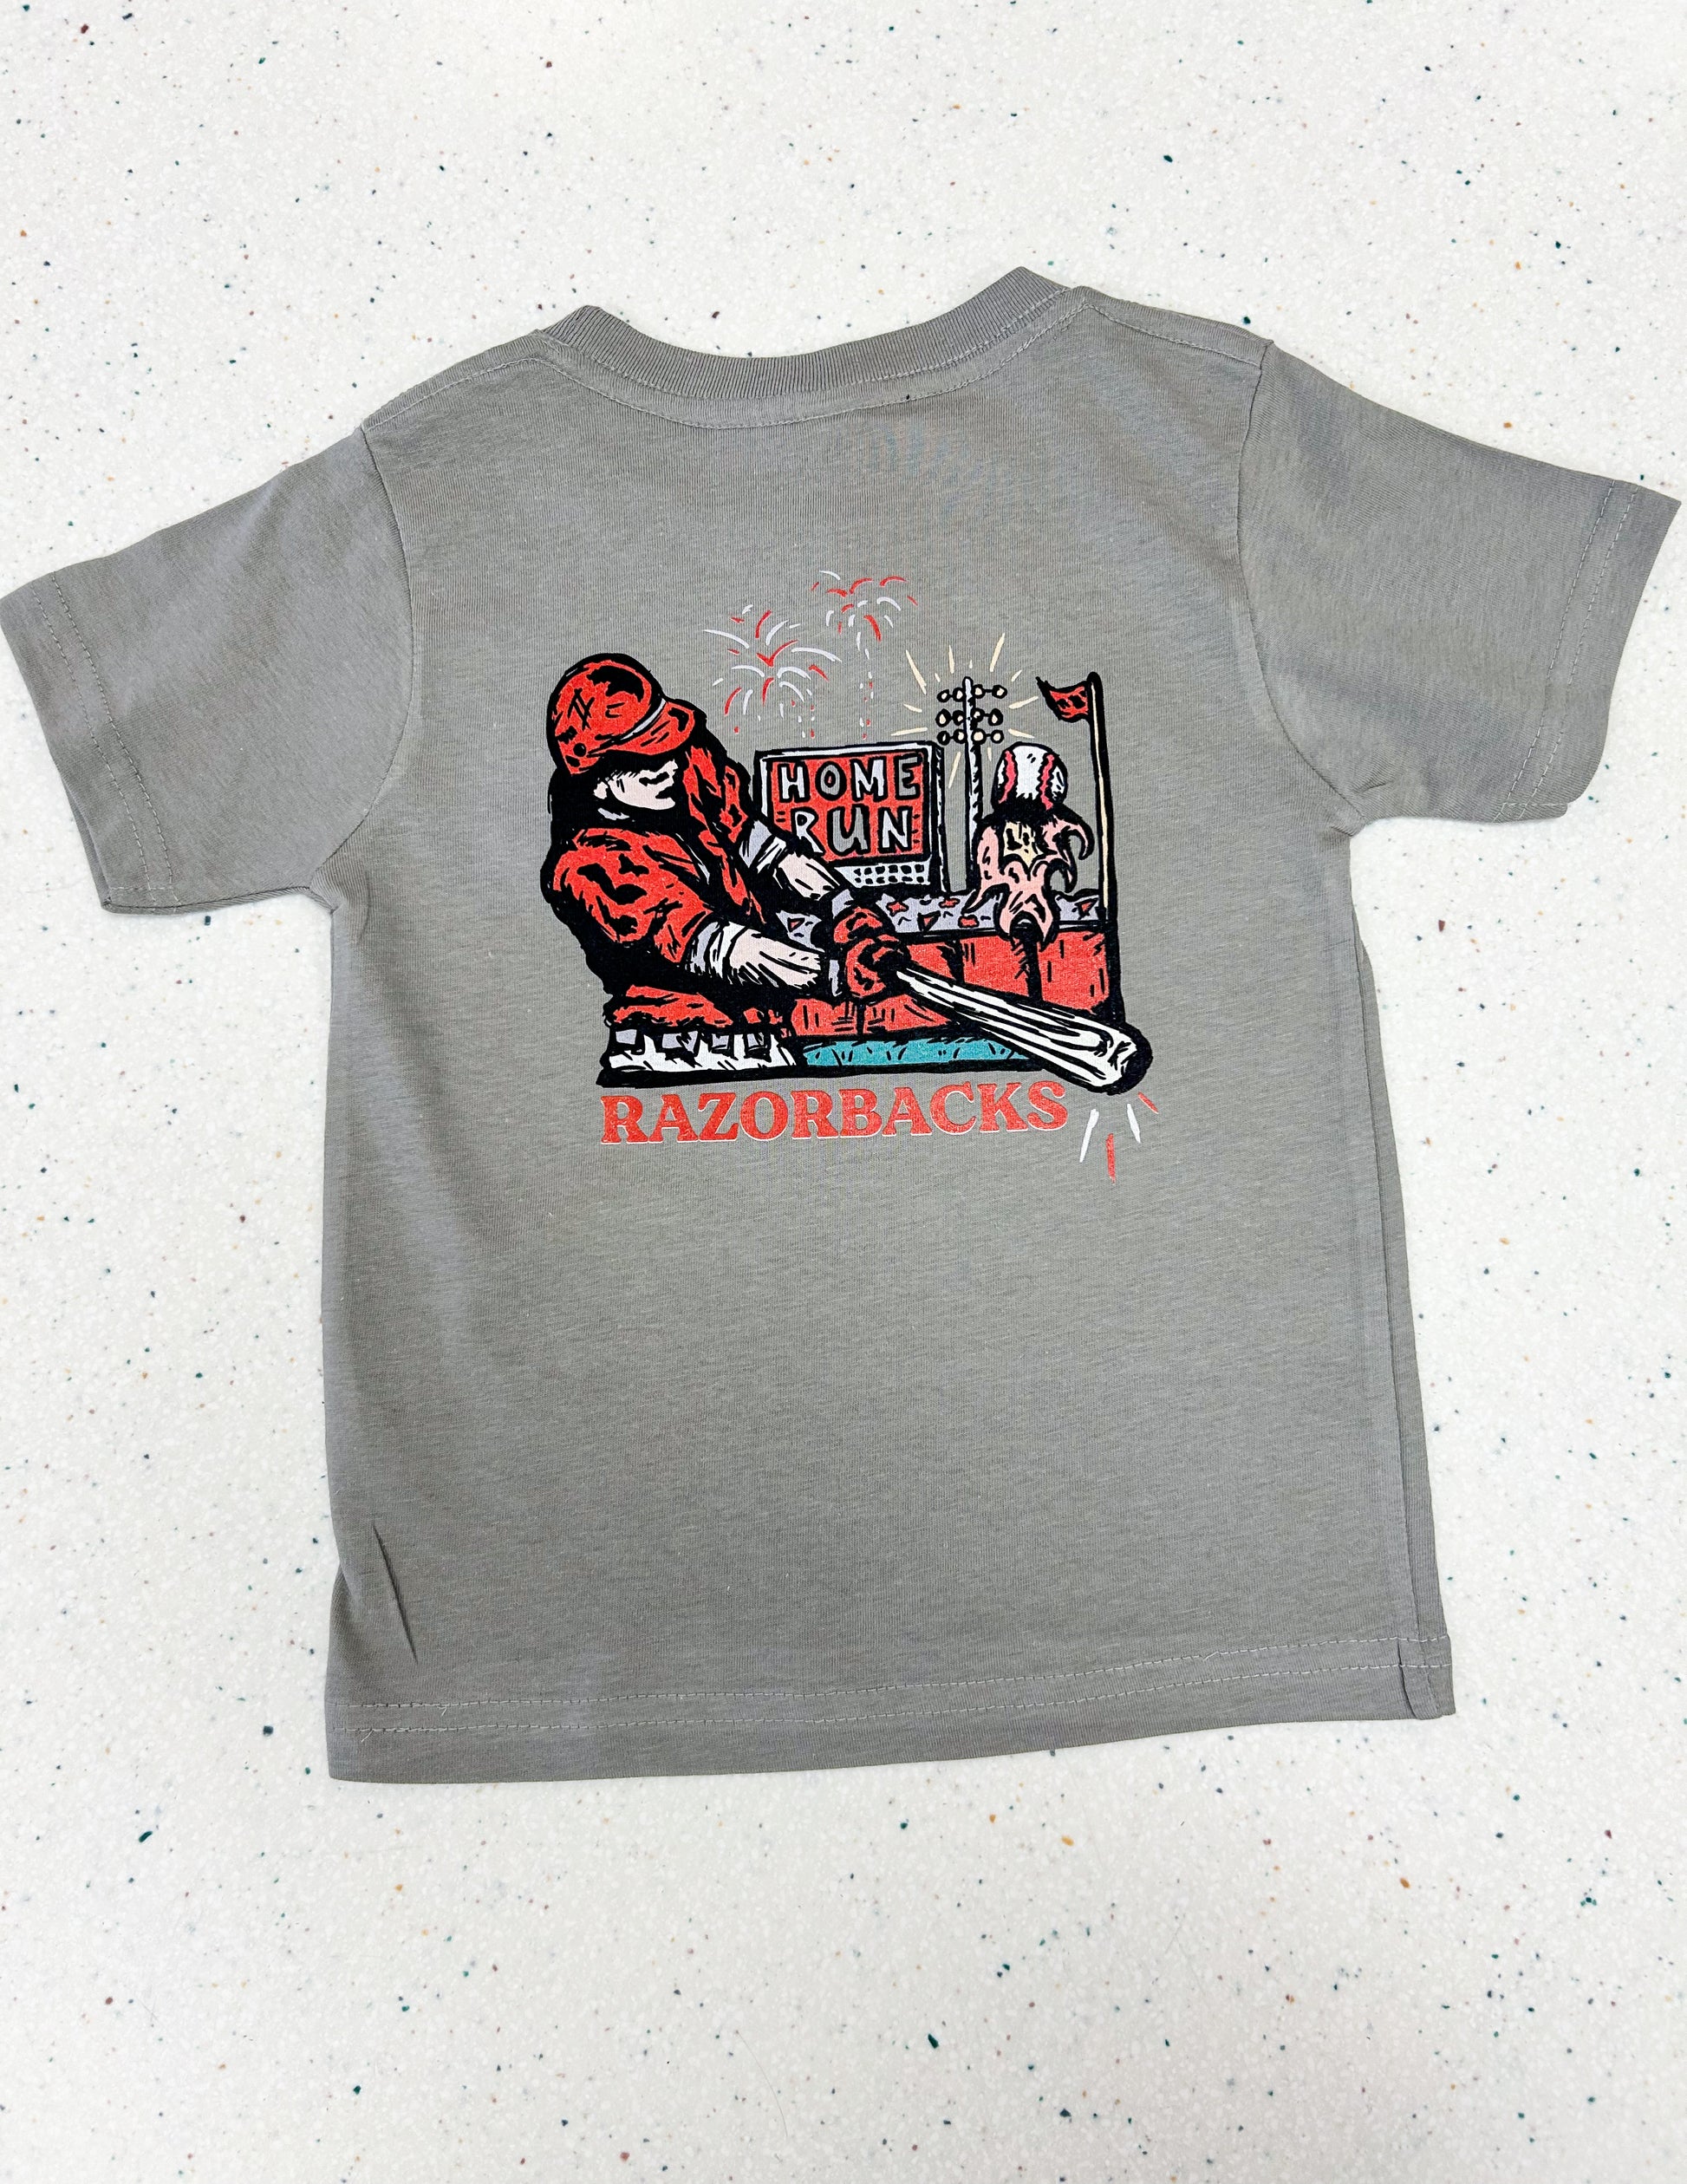 Home Run Razorbacks Baseball Shirt  - Doodlebug's Children's Boutique